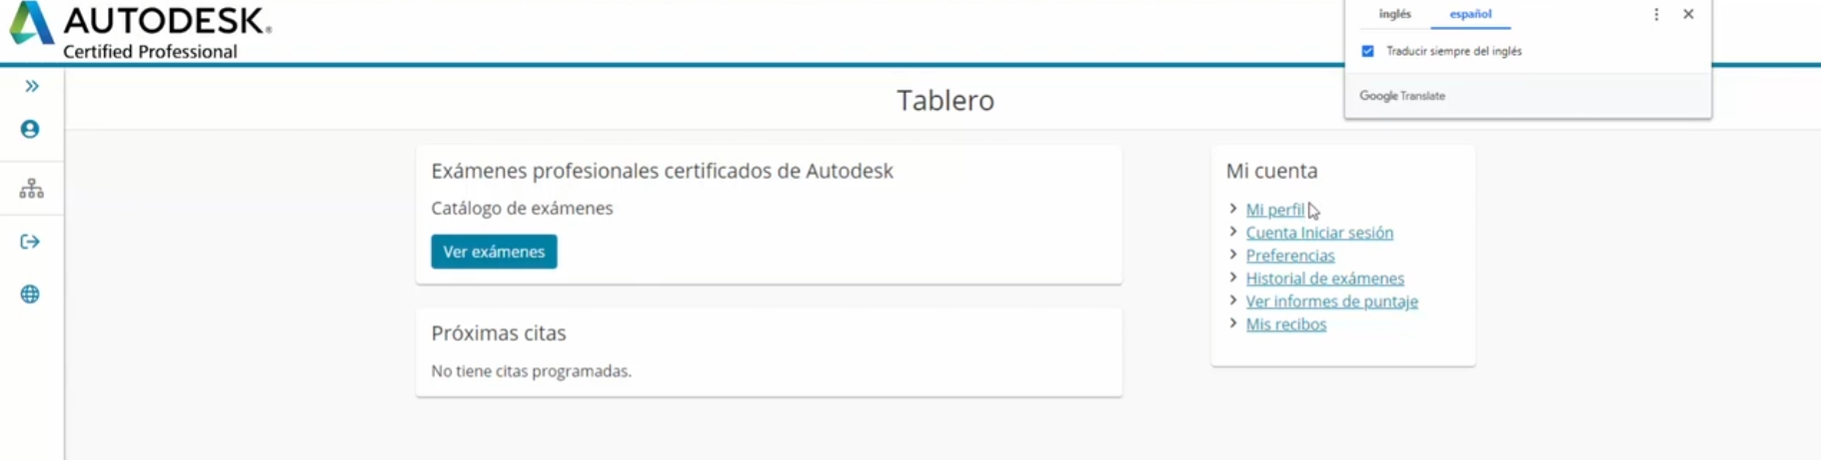 certificacion-autodesk-blog